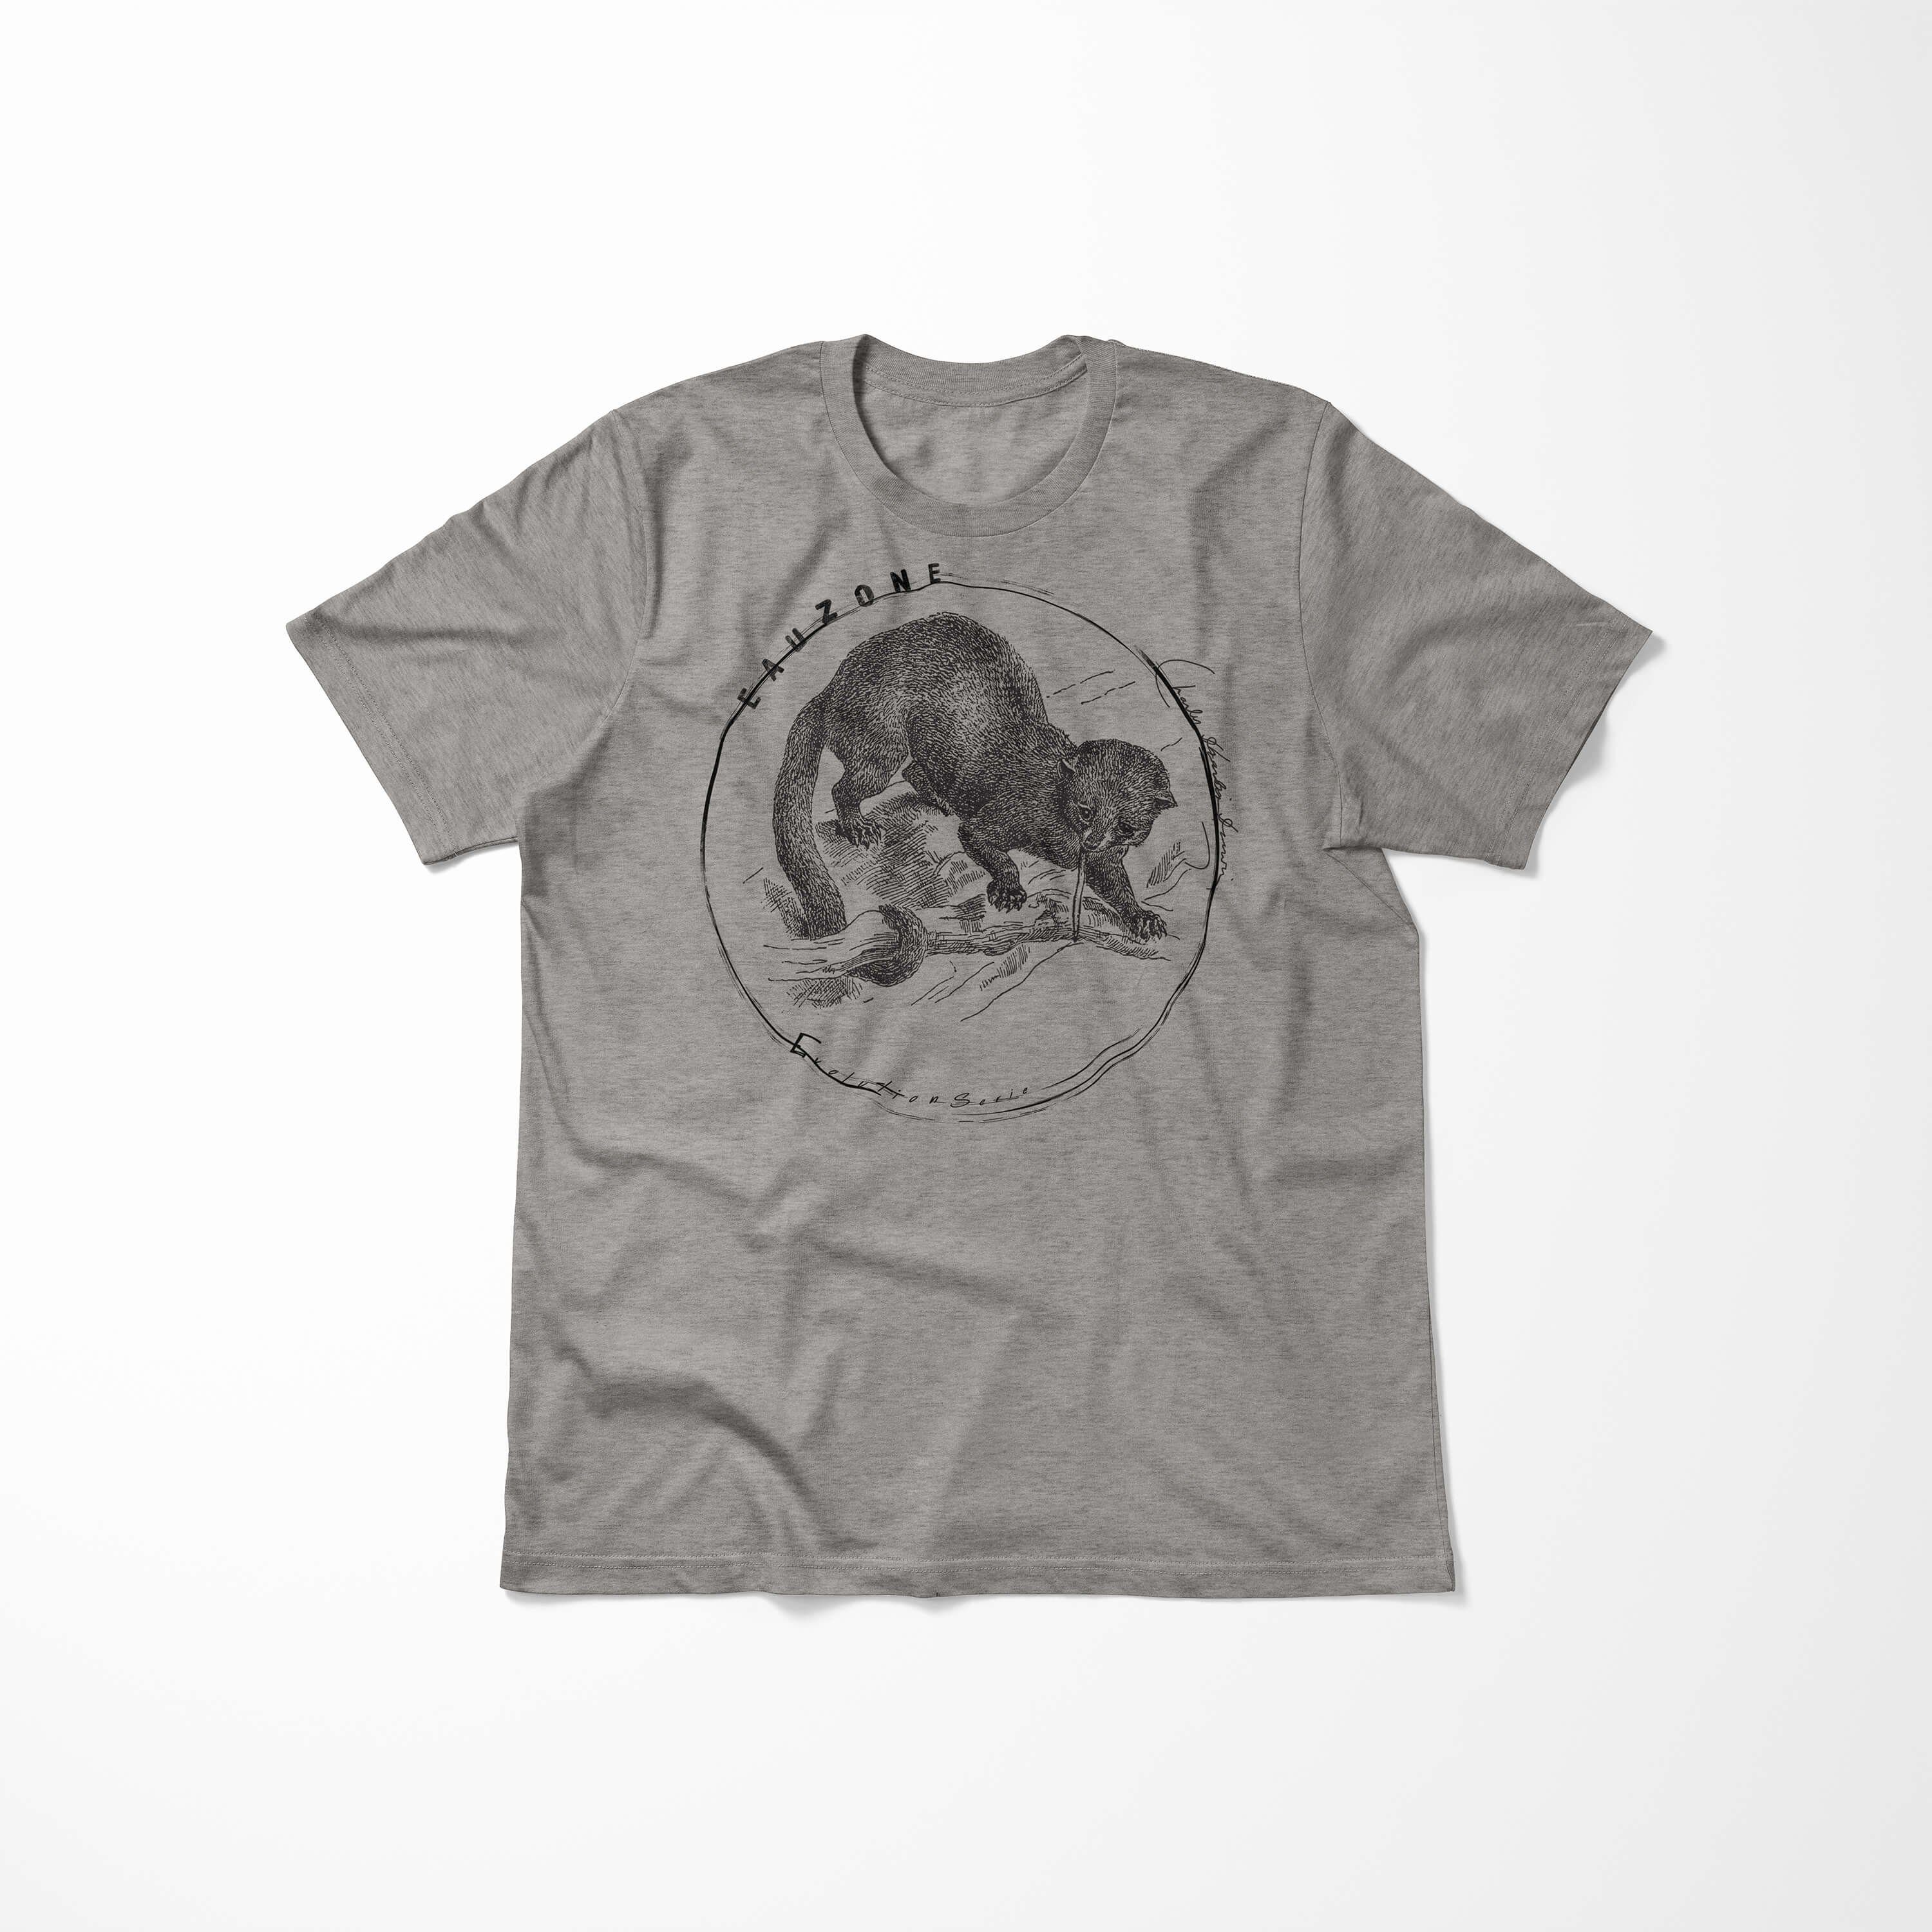 Sinus Ash Evolution Wickelbär T-Shirt Art T-Shirt Herren